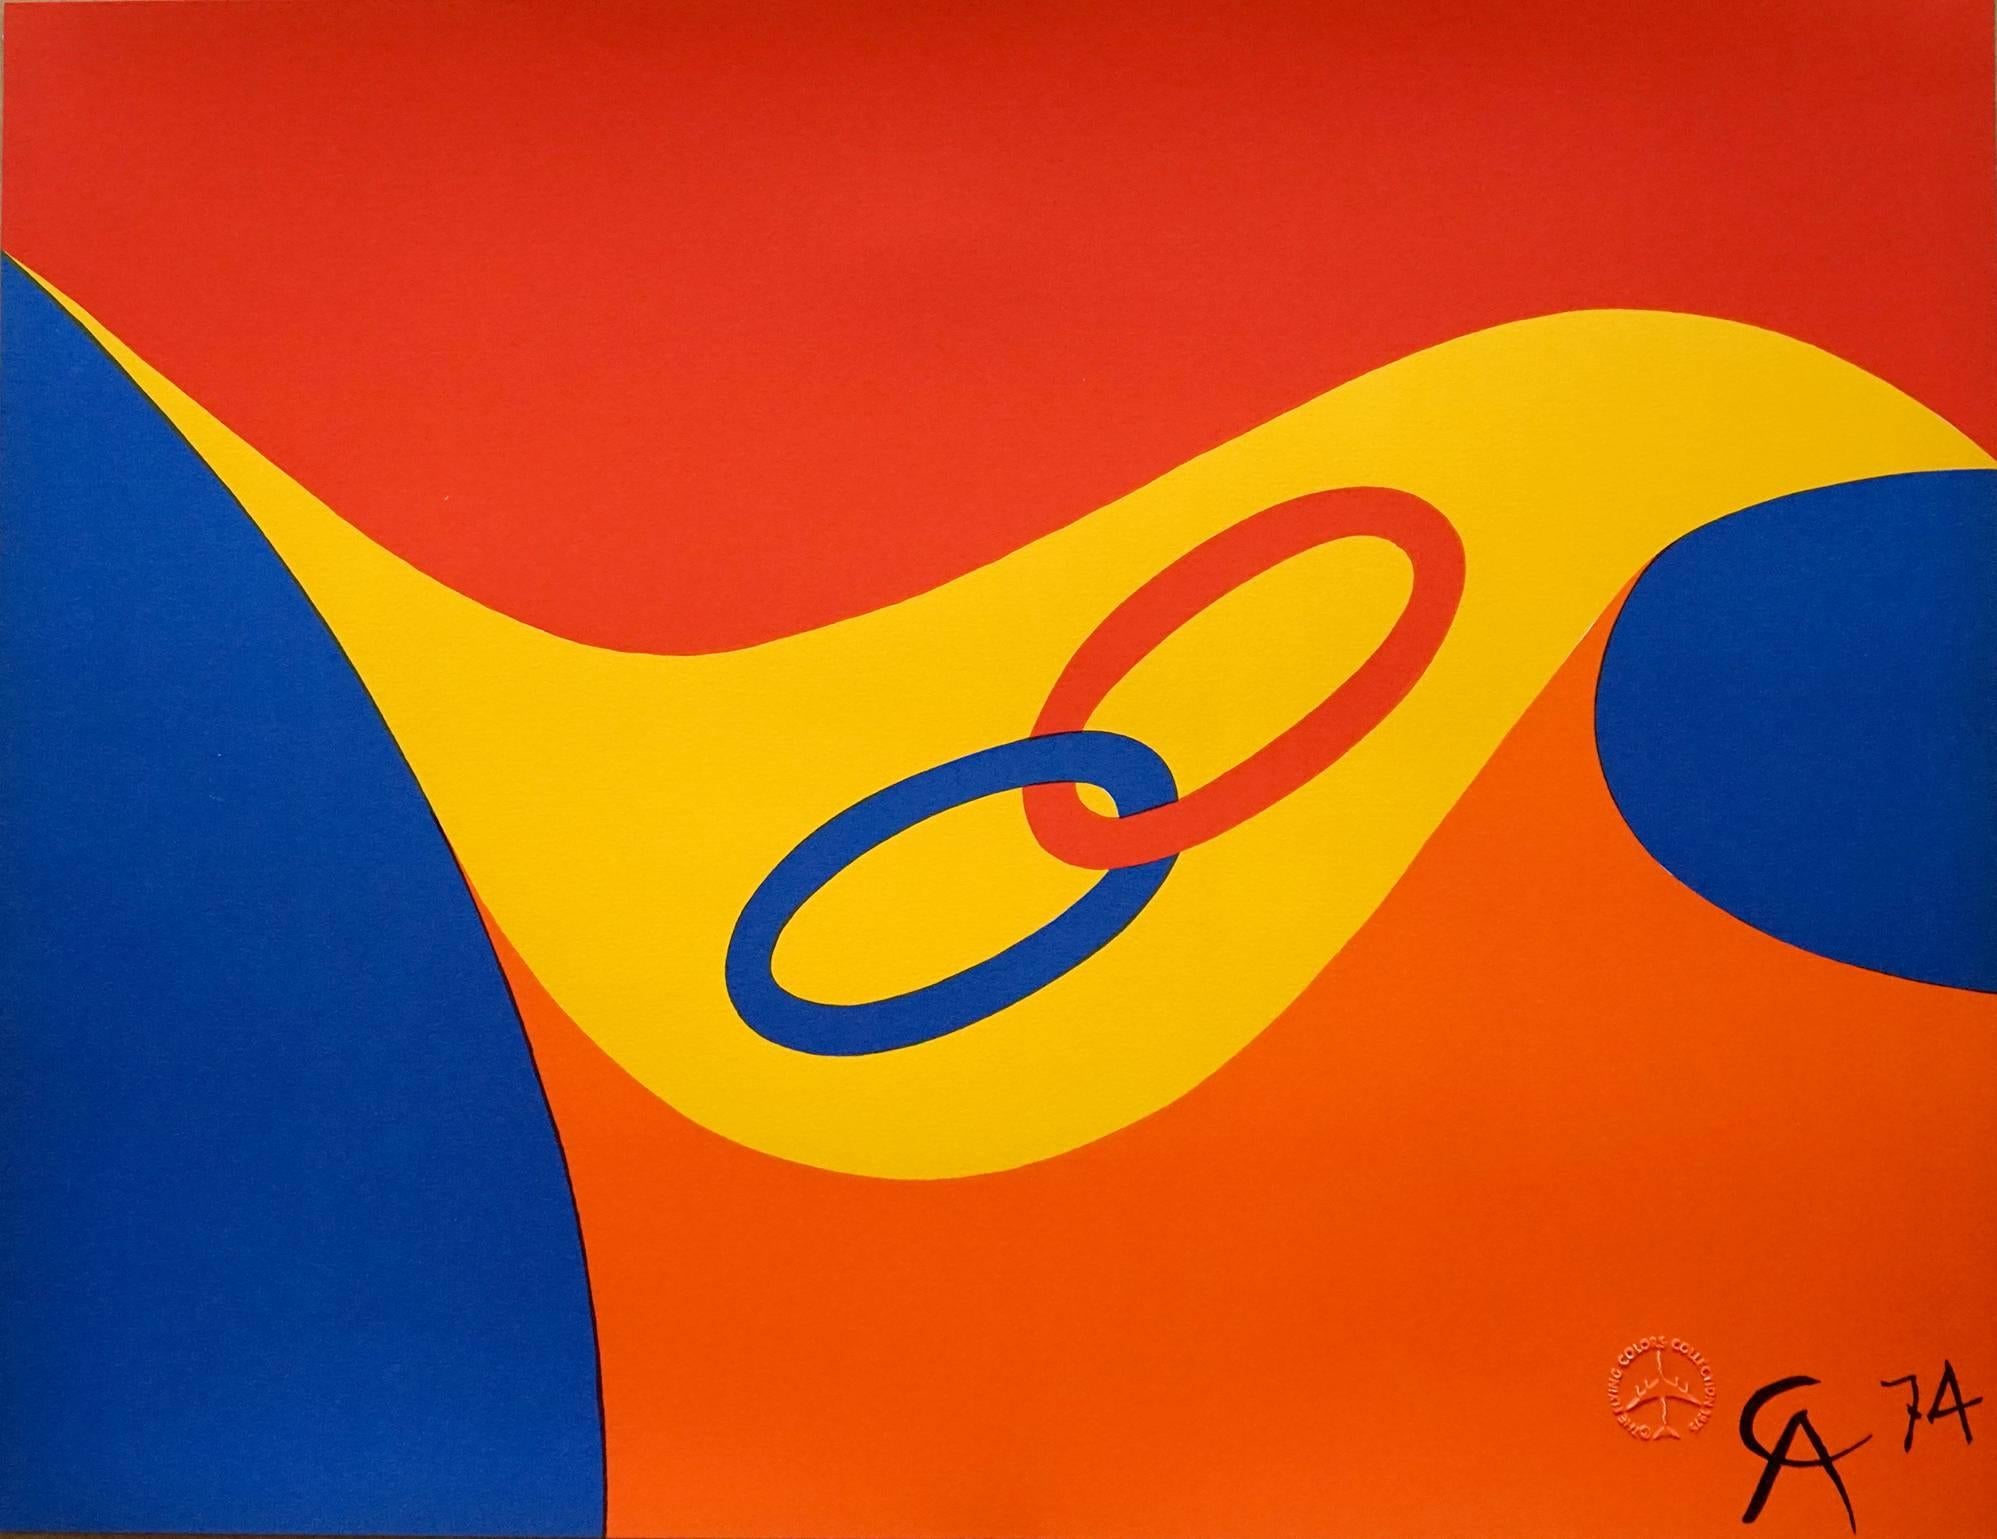 Friendship Rings - Print by Alexander Calder